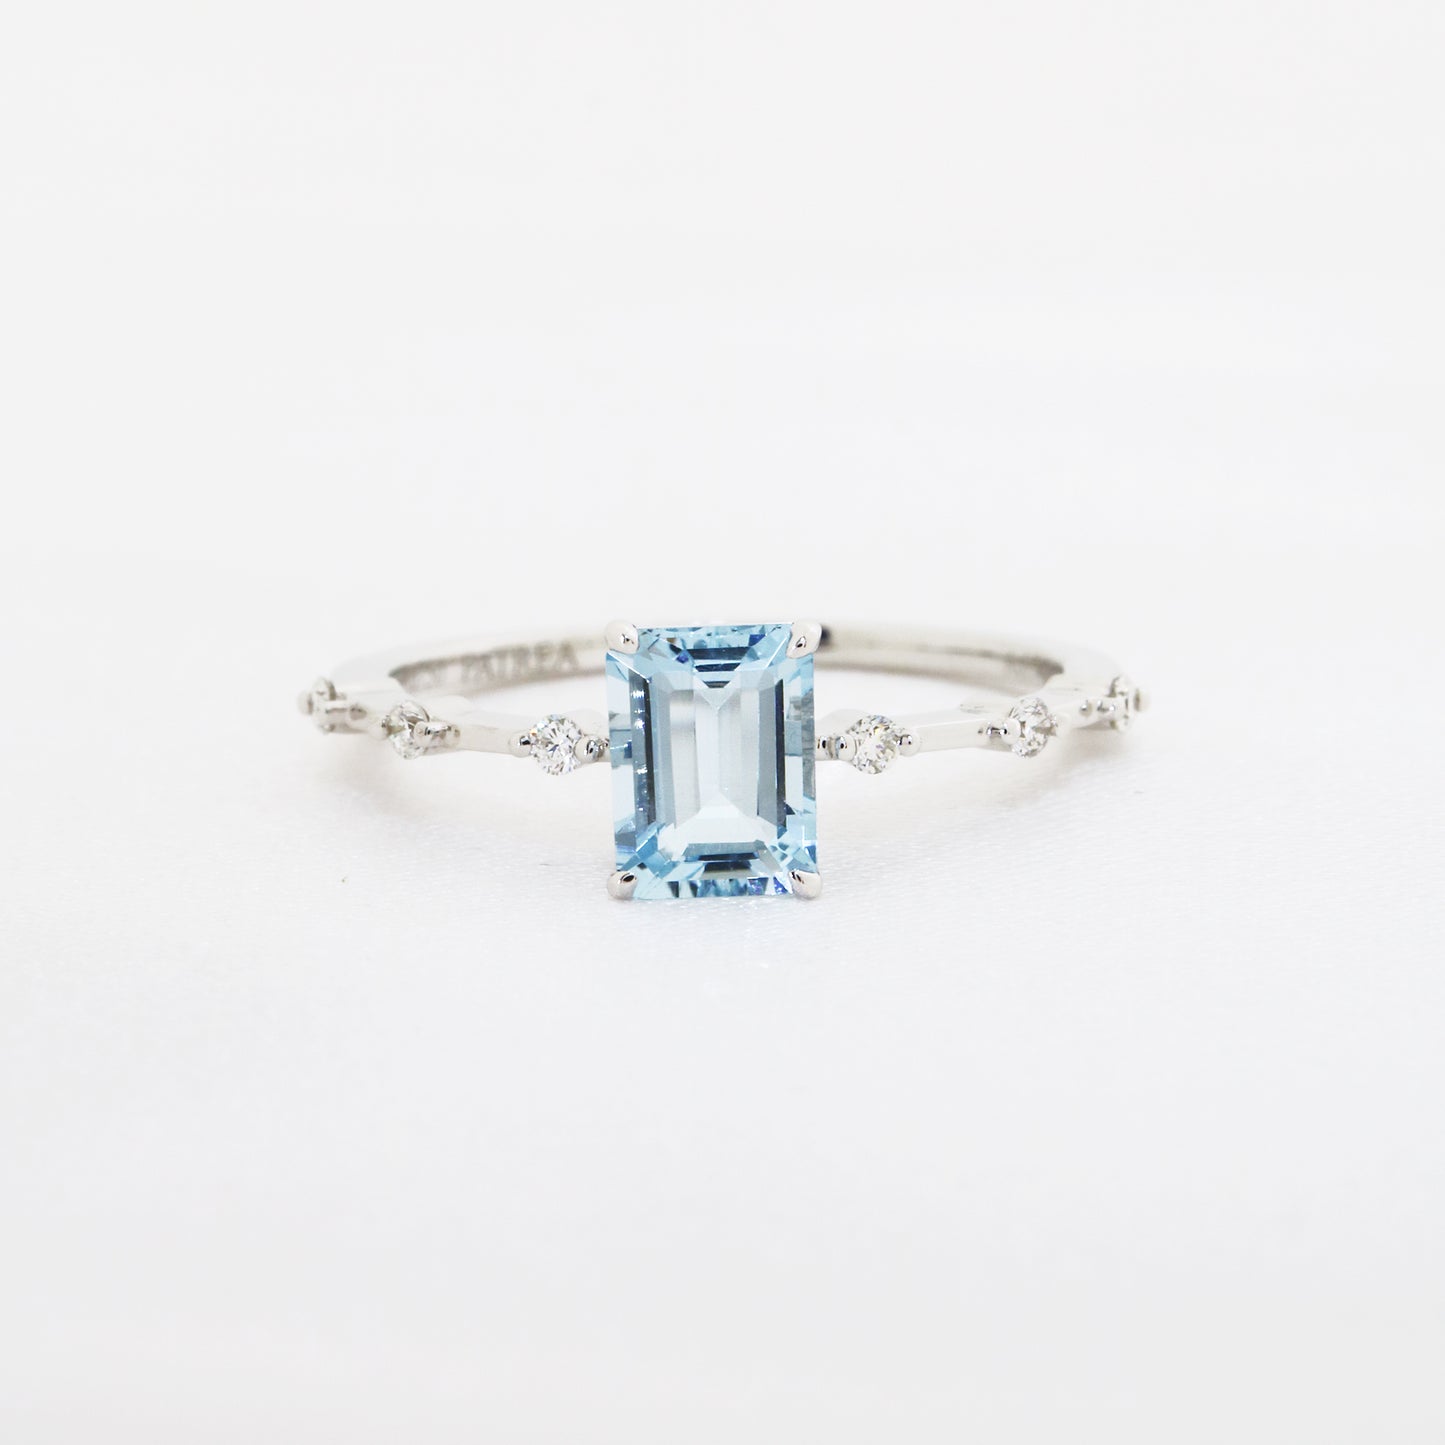  18k白金海藍寶鑽石戒指 18k White Gold Emerald-cut Aquamarine Diamond Ring